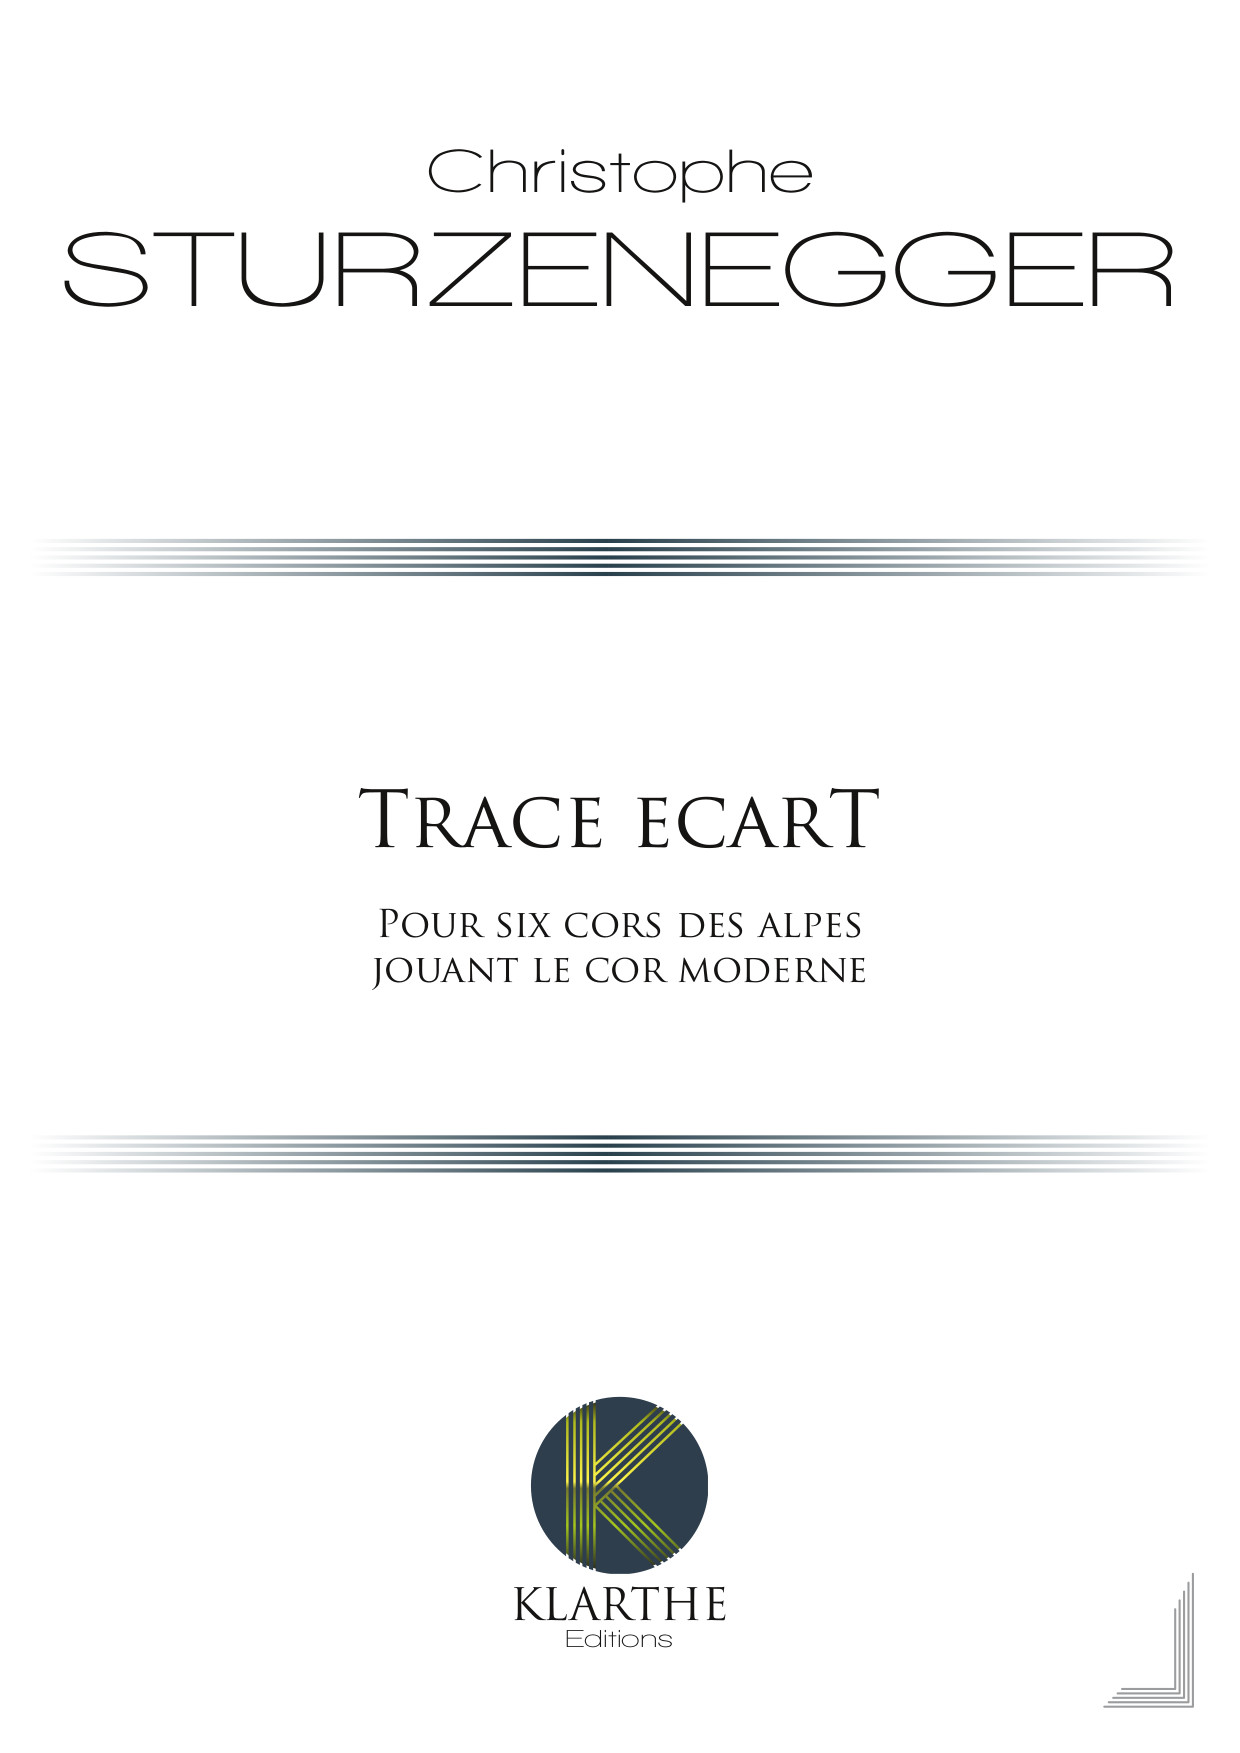 Trace ecarT (STURZENEGGER CHRISTOPHE)